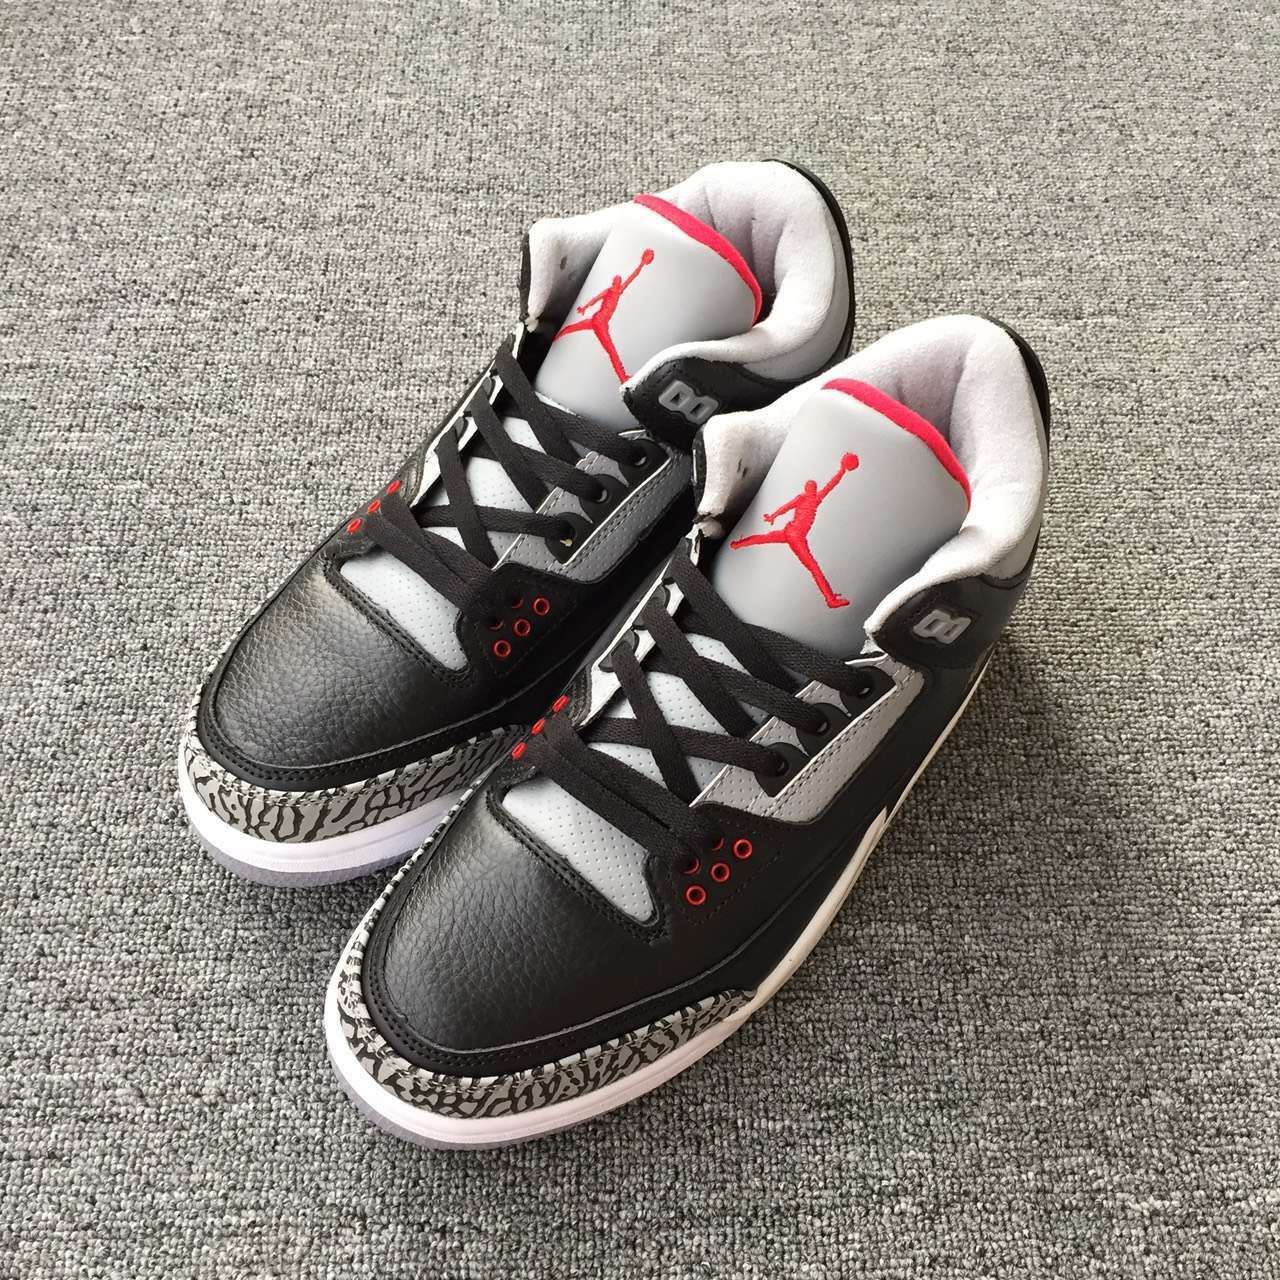 Wholesale Air Jordan 3 Iii Retro Countdown Pack Black Cement Gray Jordans 3s Basketball Shoes ...